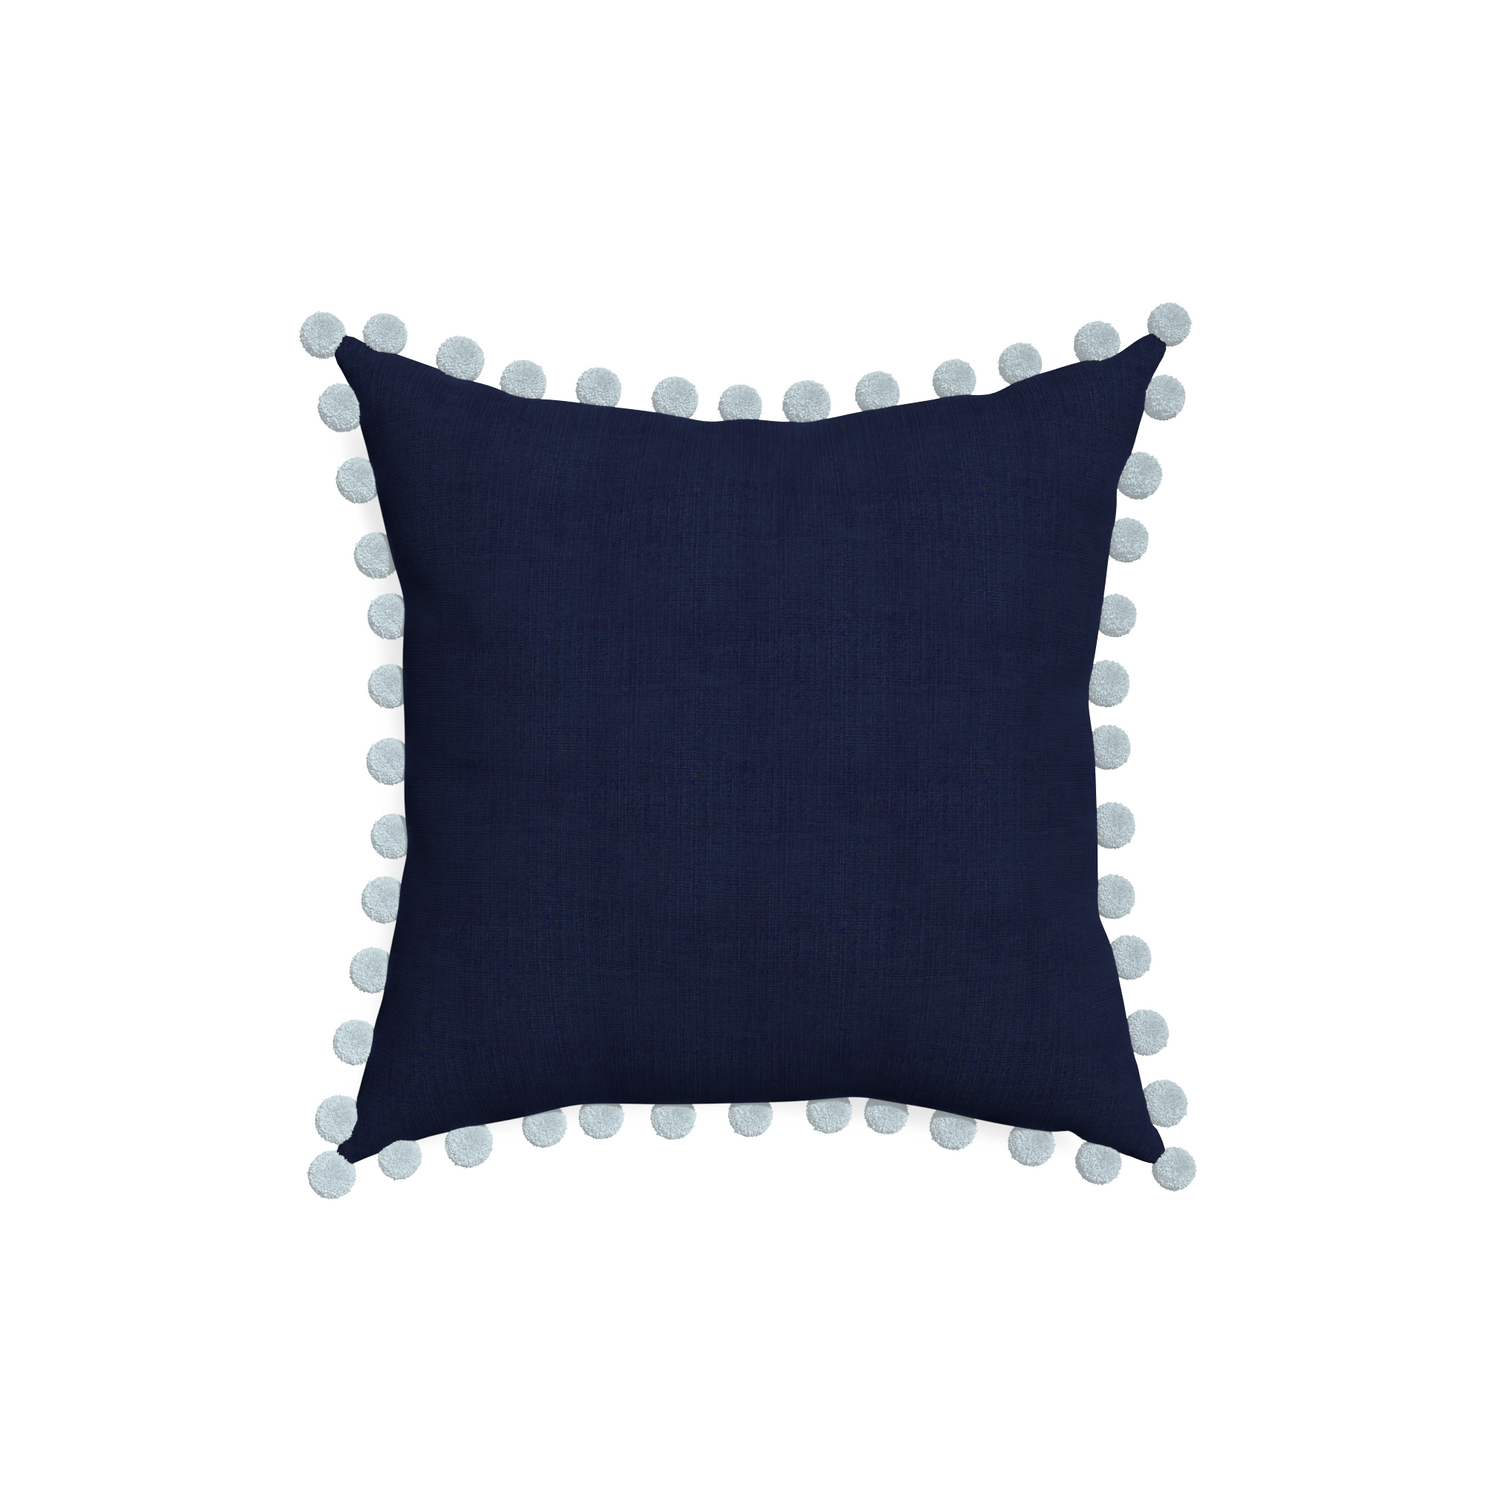 18-square midnight custom pillow with powder pom pom on white background